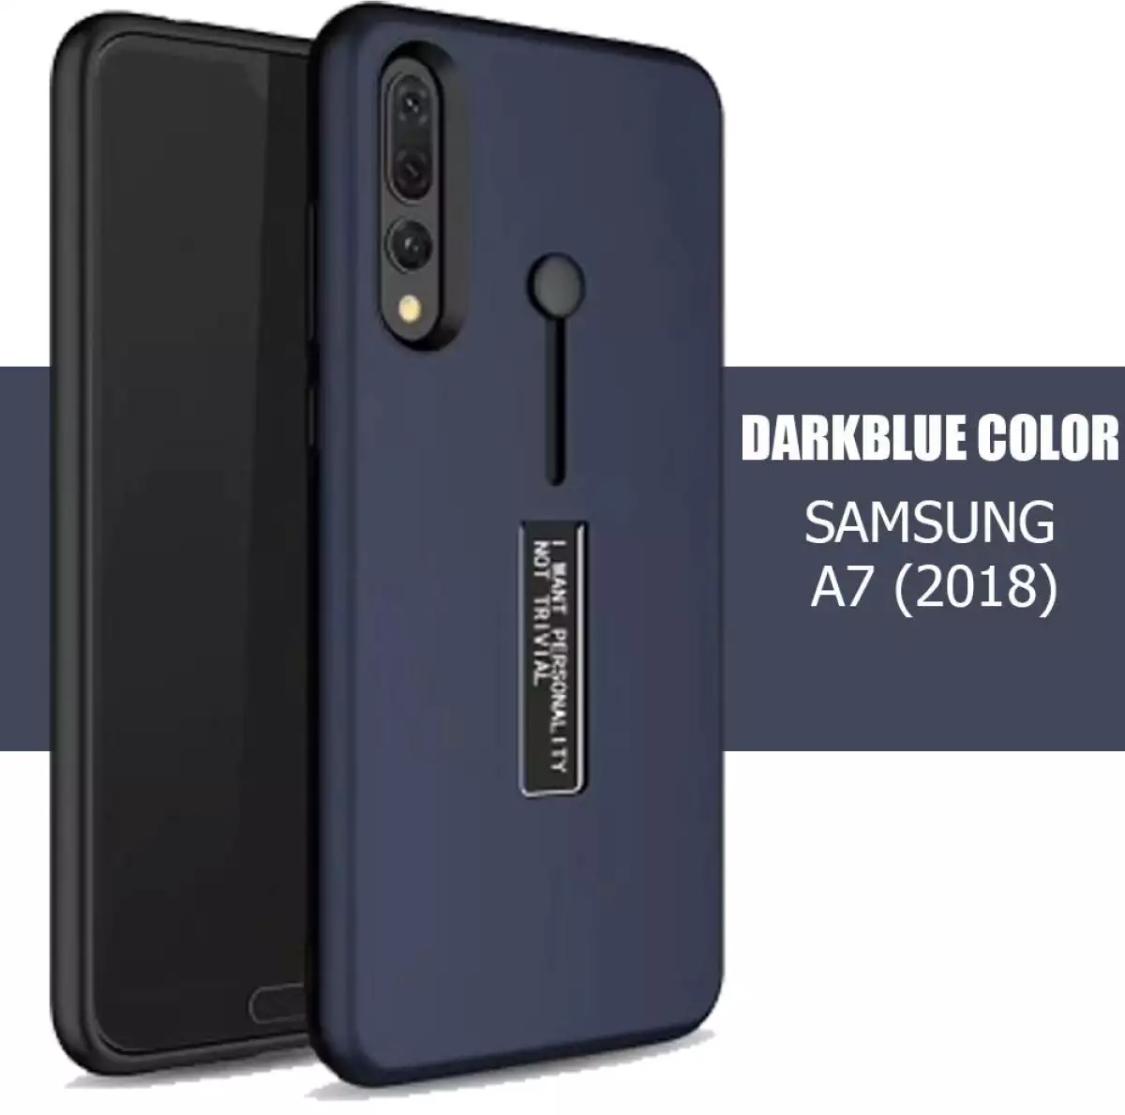 Case Samsung galaxy A7 2018 เคสโทรศัพท์ซัมซุง a7 2018 เคสตั้งได้ เคสกันกระแทก สายคล้องนิ้ว แหวน เลื่อนได้ สินค้าใหม่สวยหรู